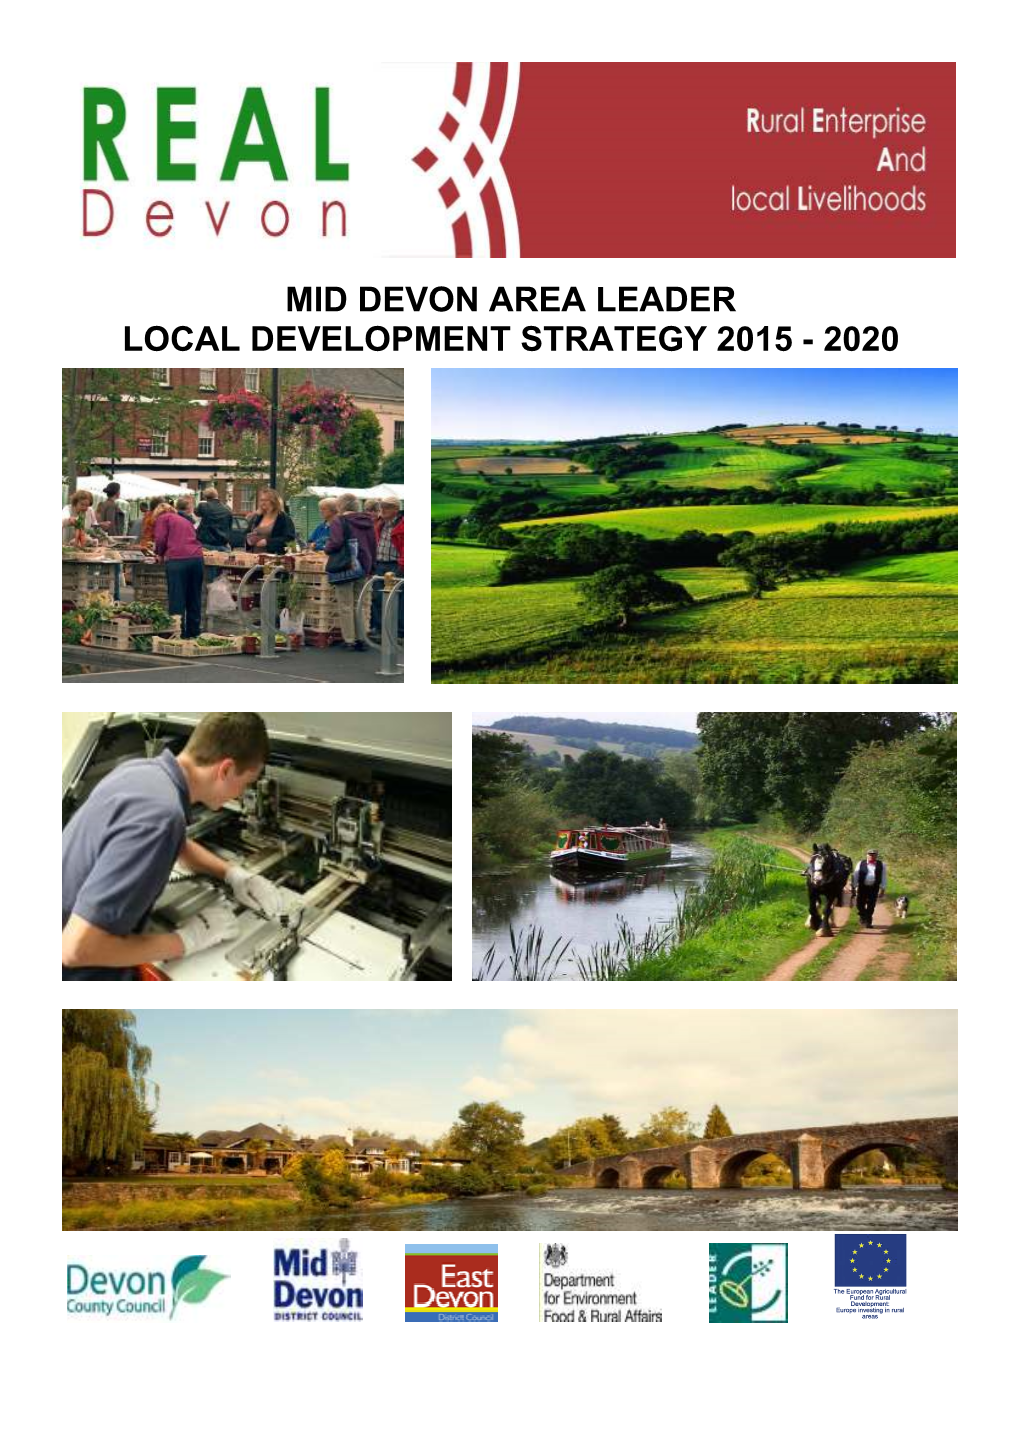 Local Development Strategy 2015 - 2020